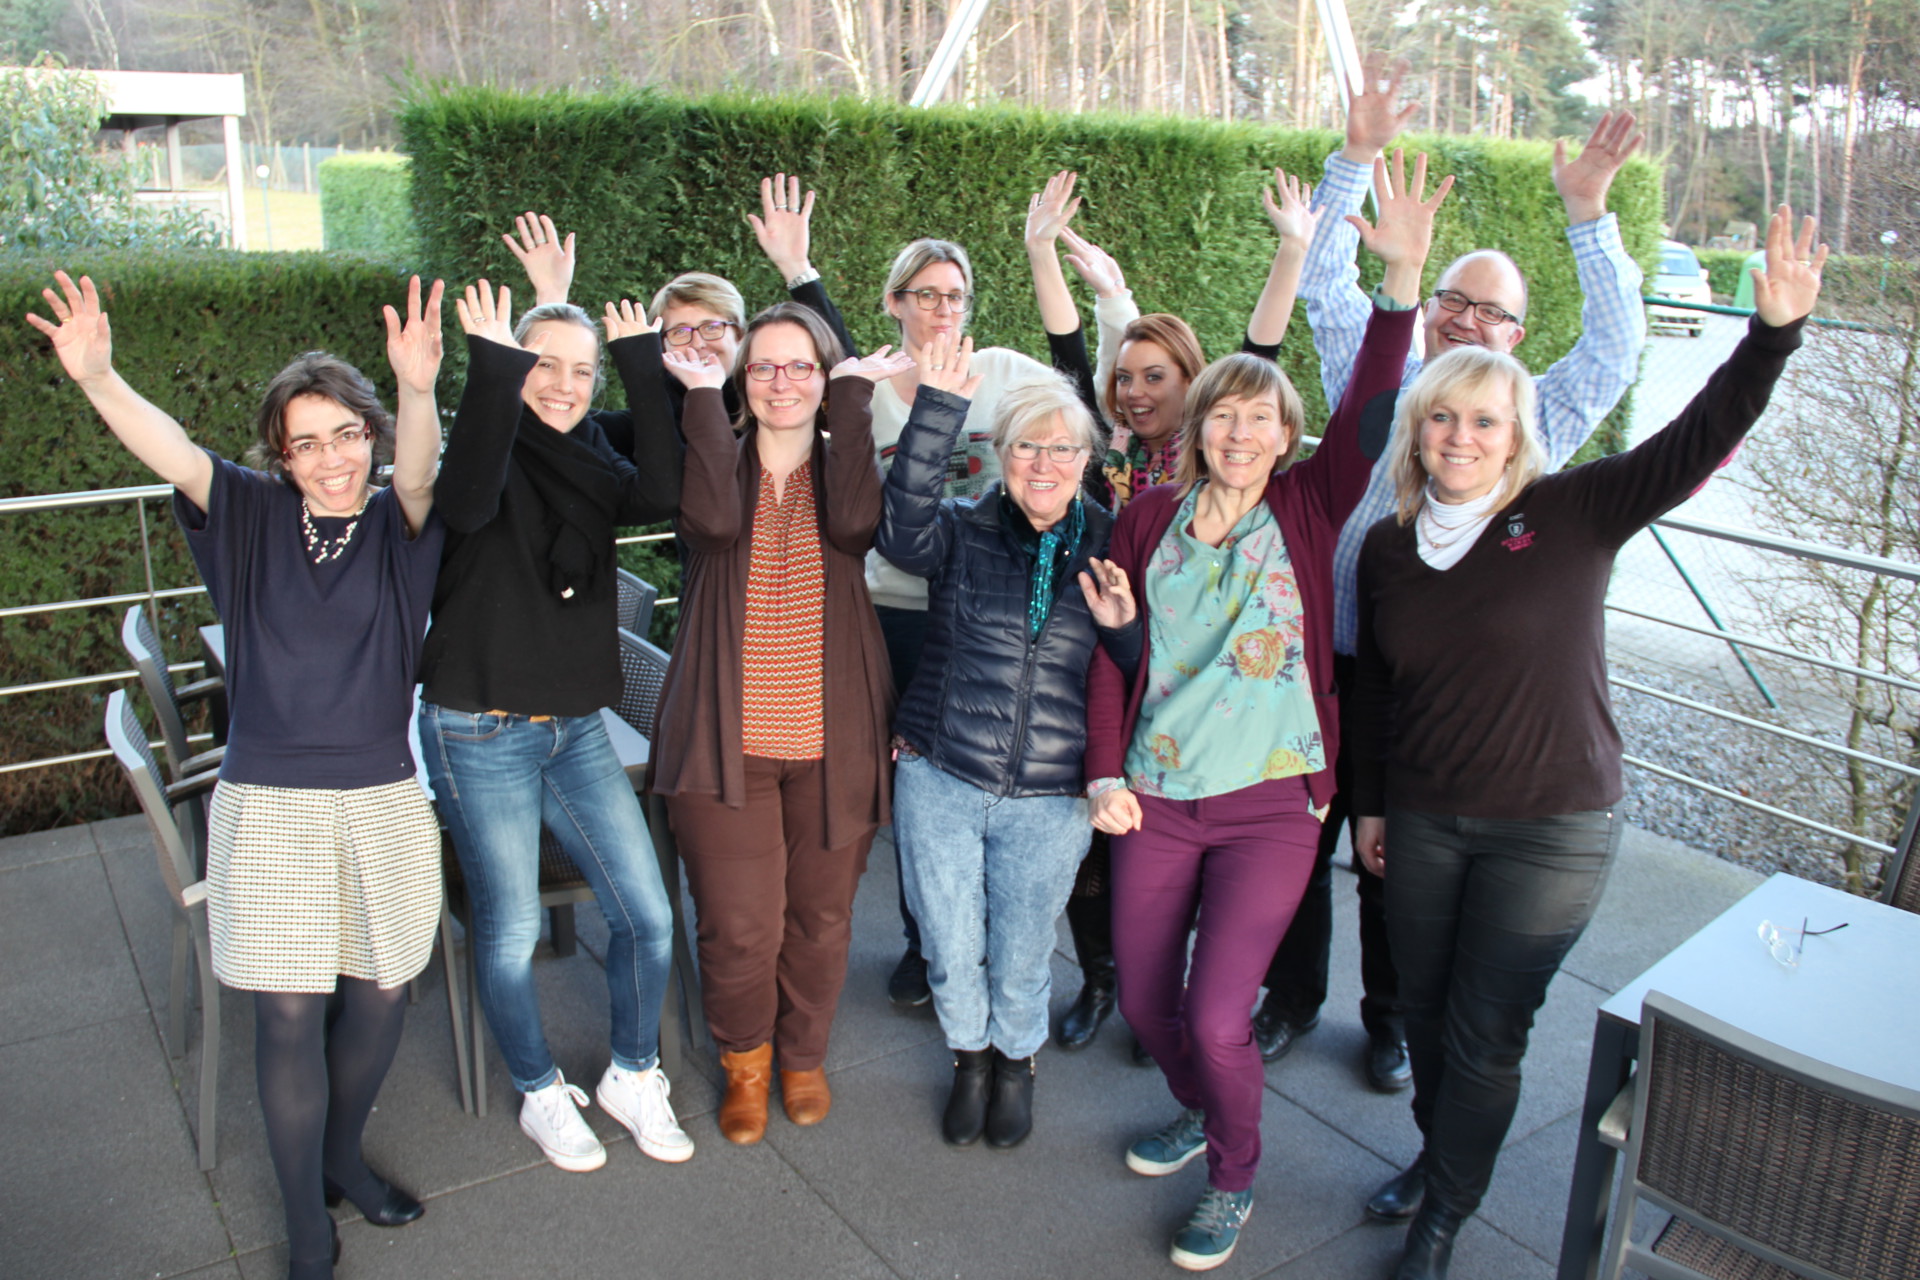 authentiek en sterk leiderschap met lef groep deelnemers van Inge Ketels Bureau Stroom